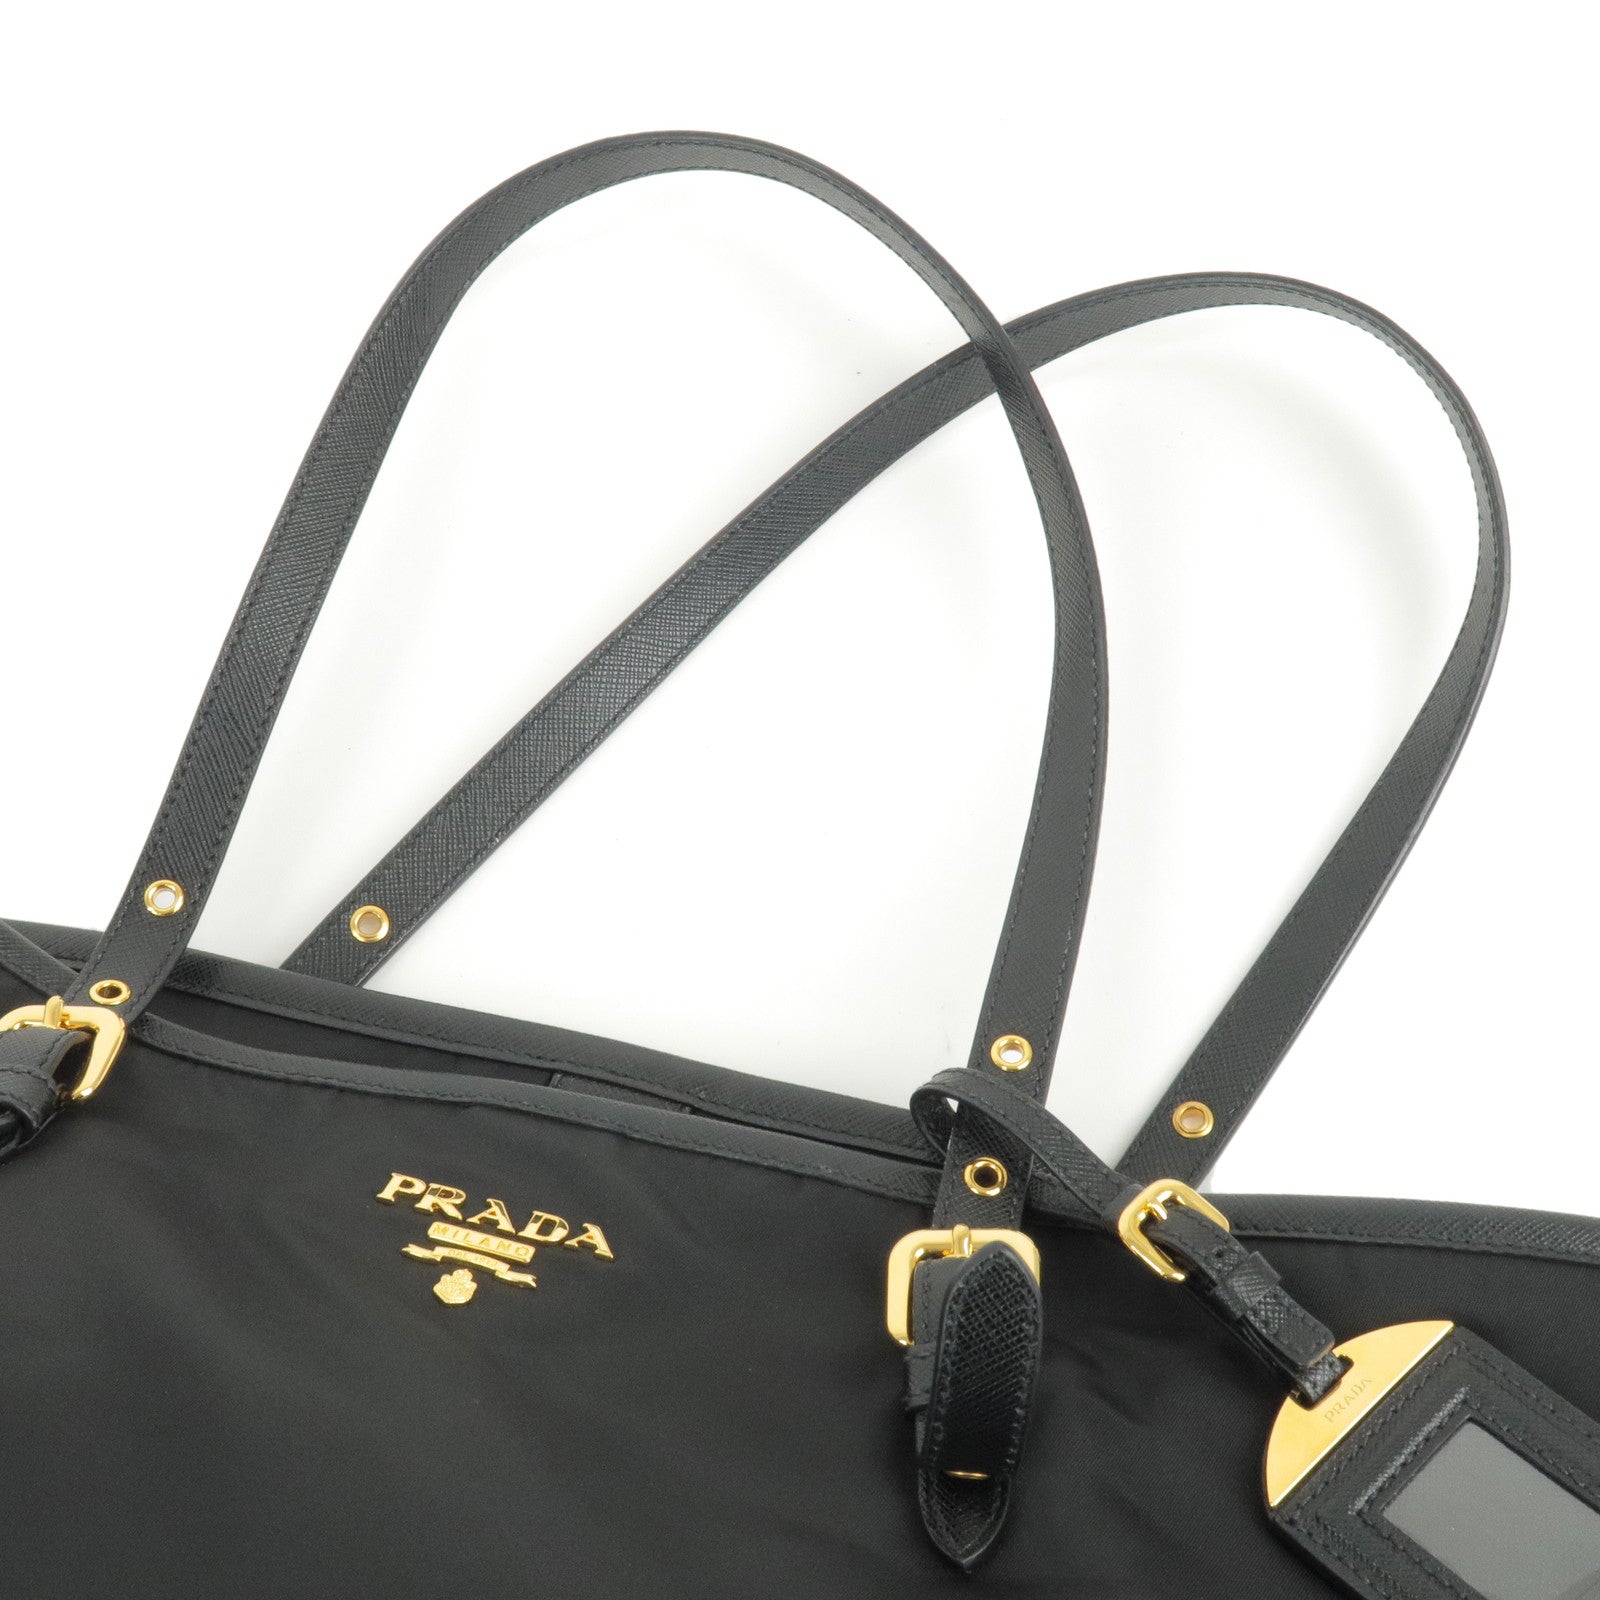 PRADA Tessuto Nylon Tote Shoulder Bag Black